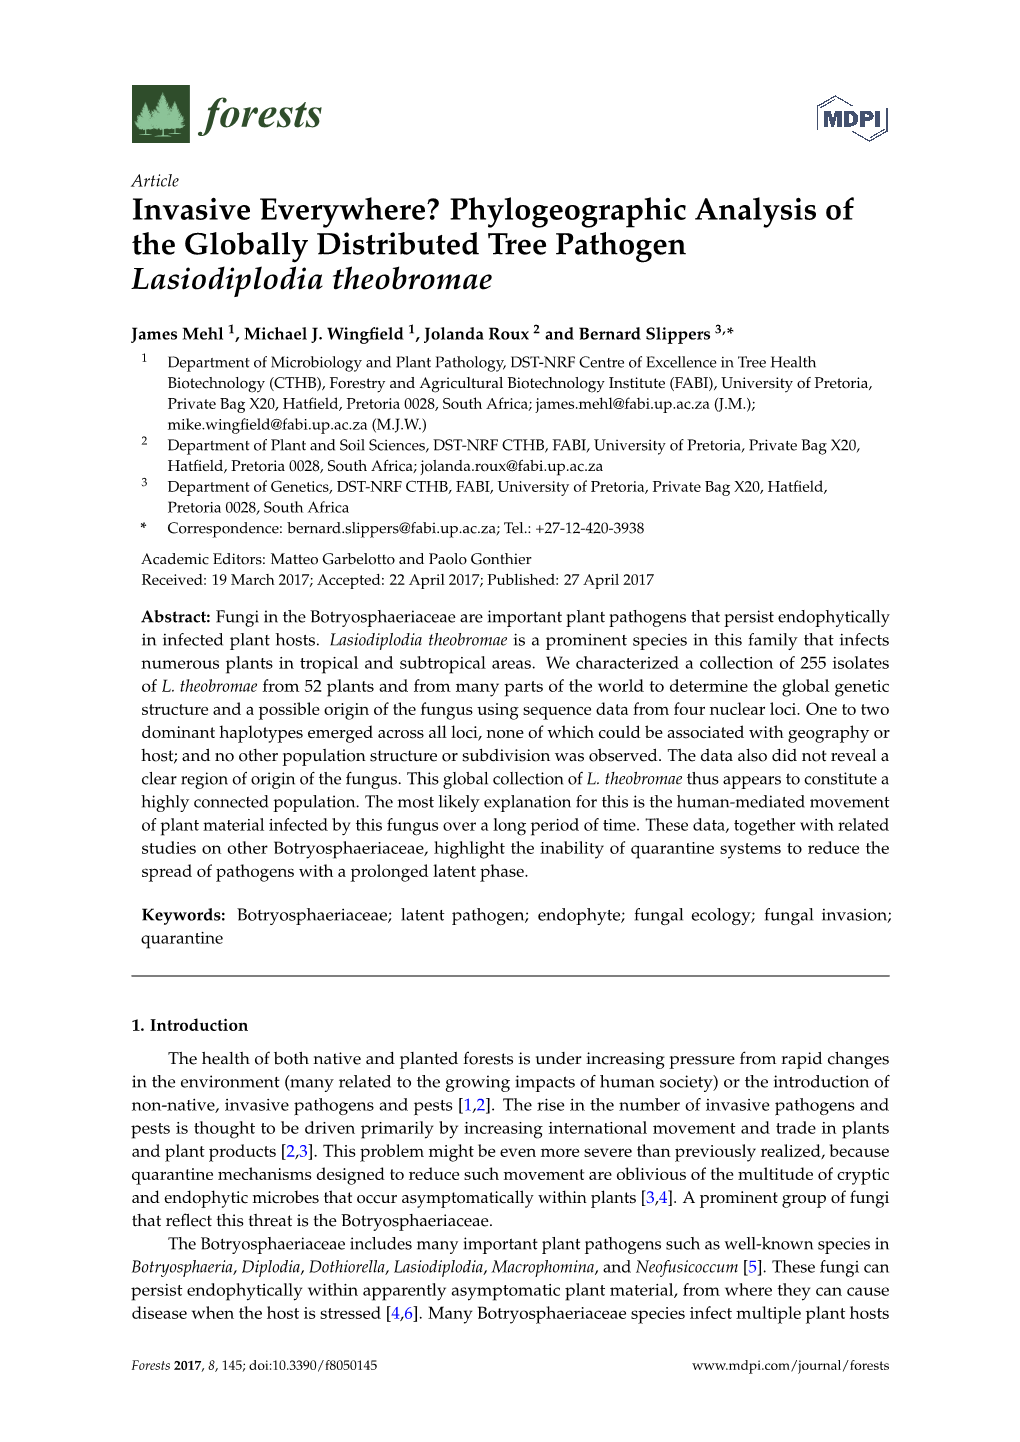 Phylogeographic Analysis of the Globally Distributed Tree Pathogen Lasiodiplodia Theobromae